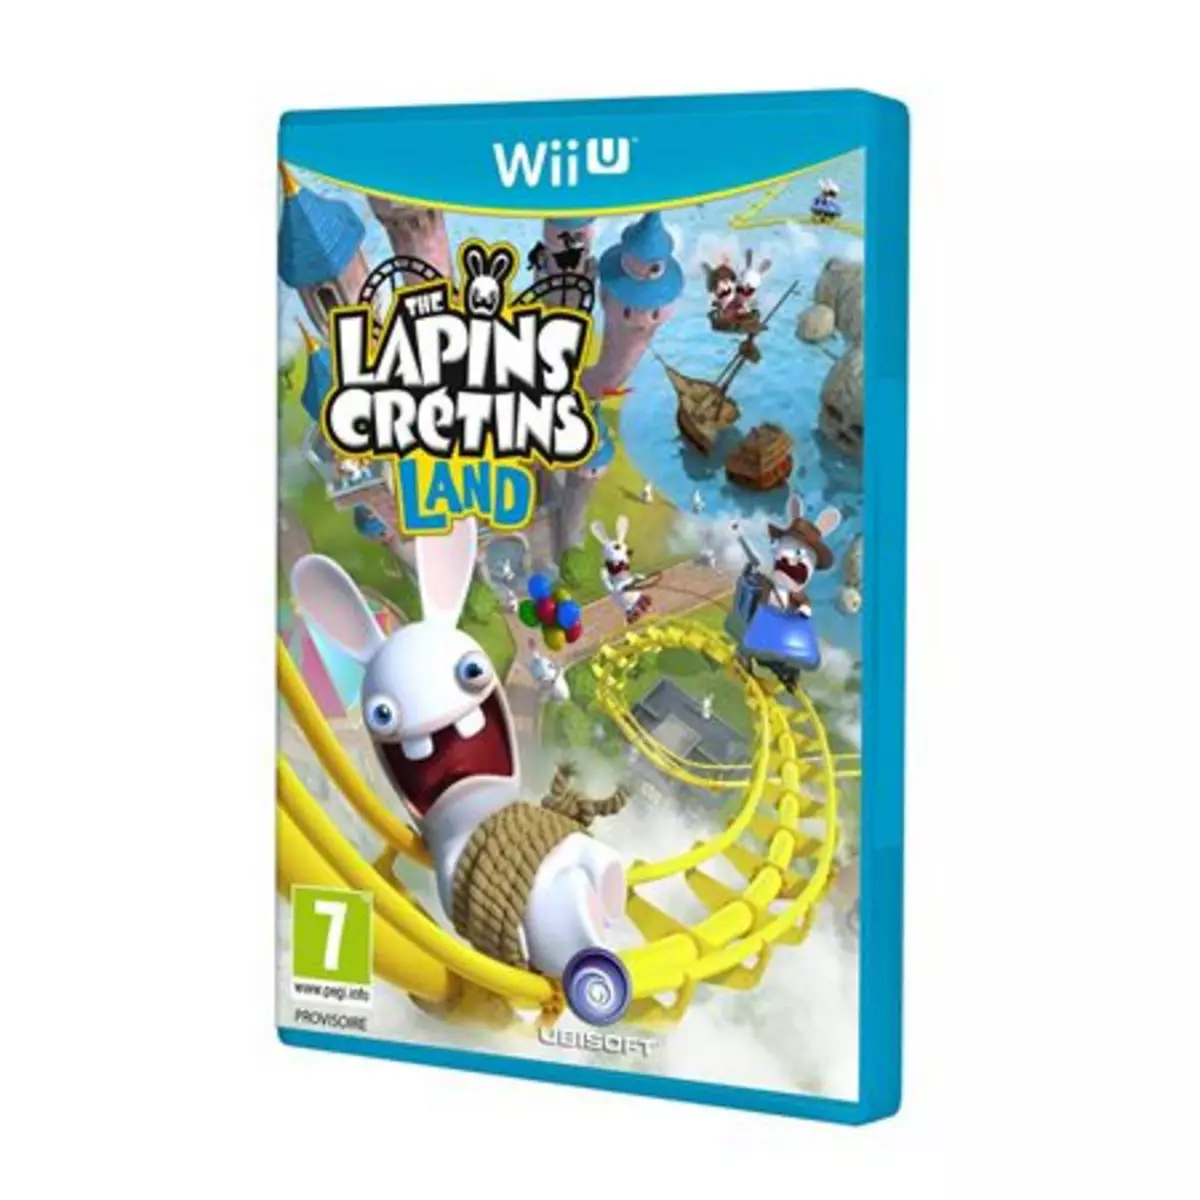 Les Lapins crétins land Wii U